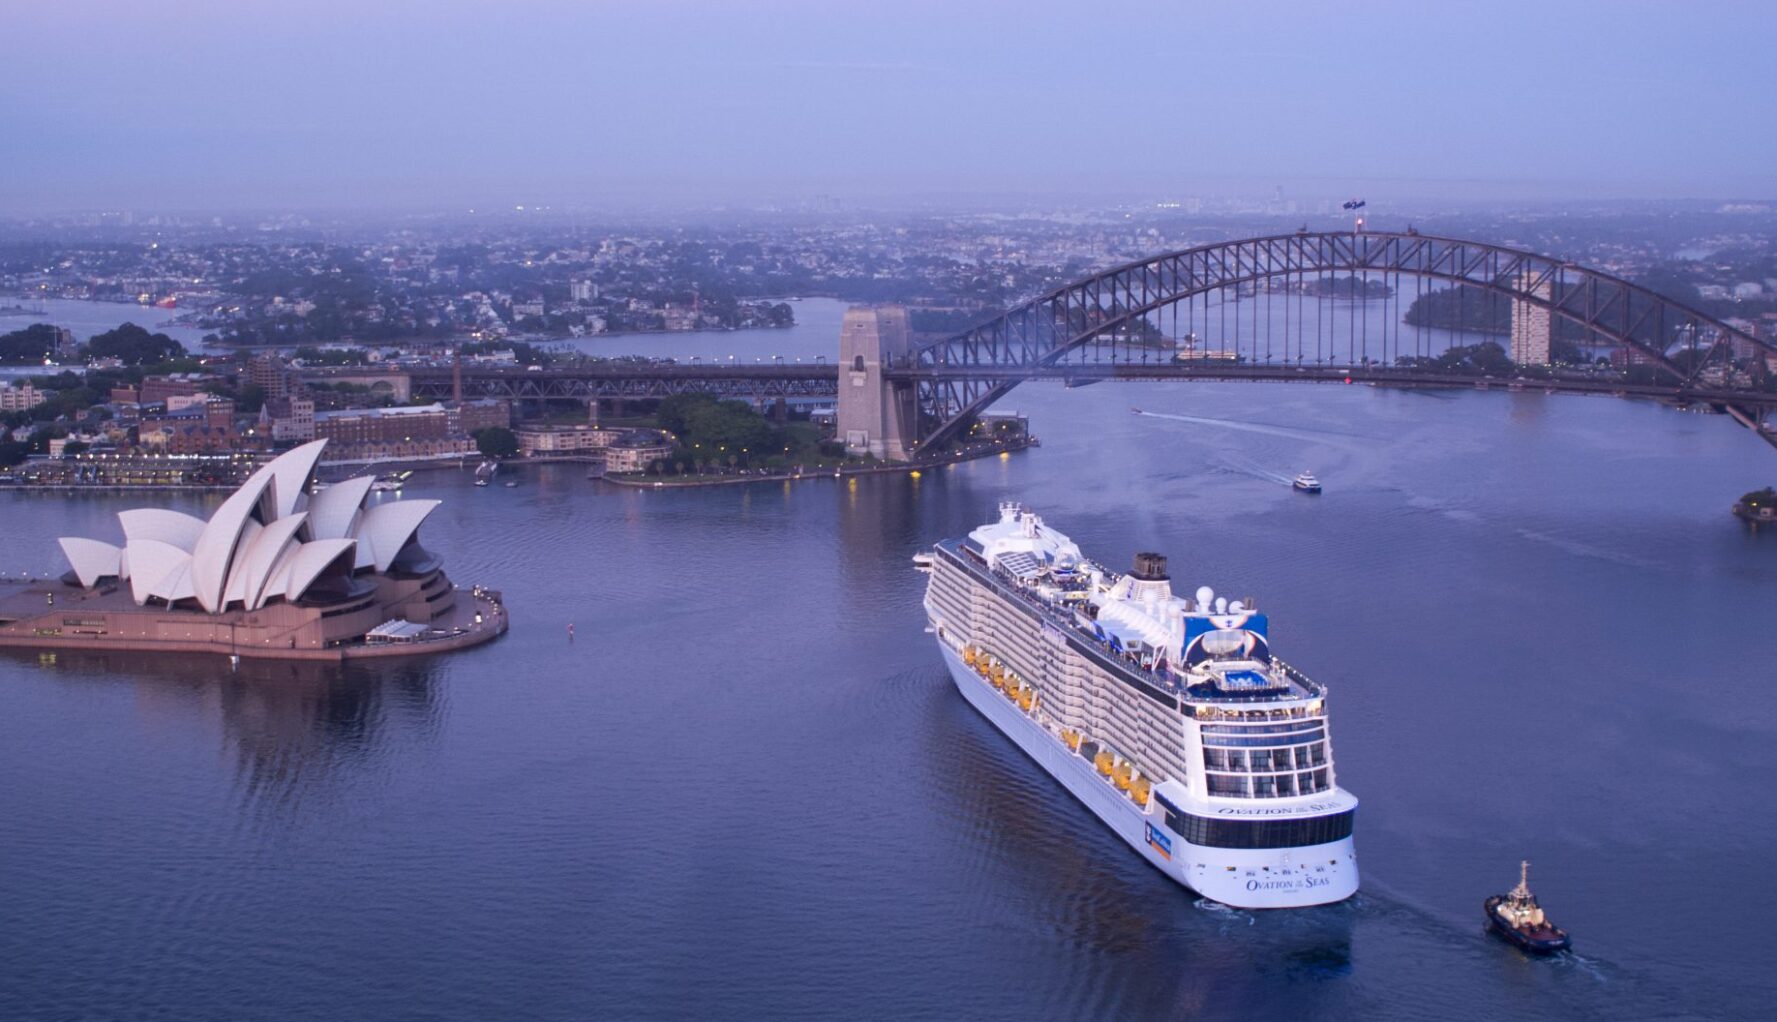 ovation of the seas - cruise in sydney cruise passenger